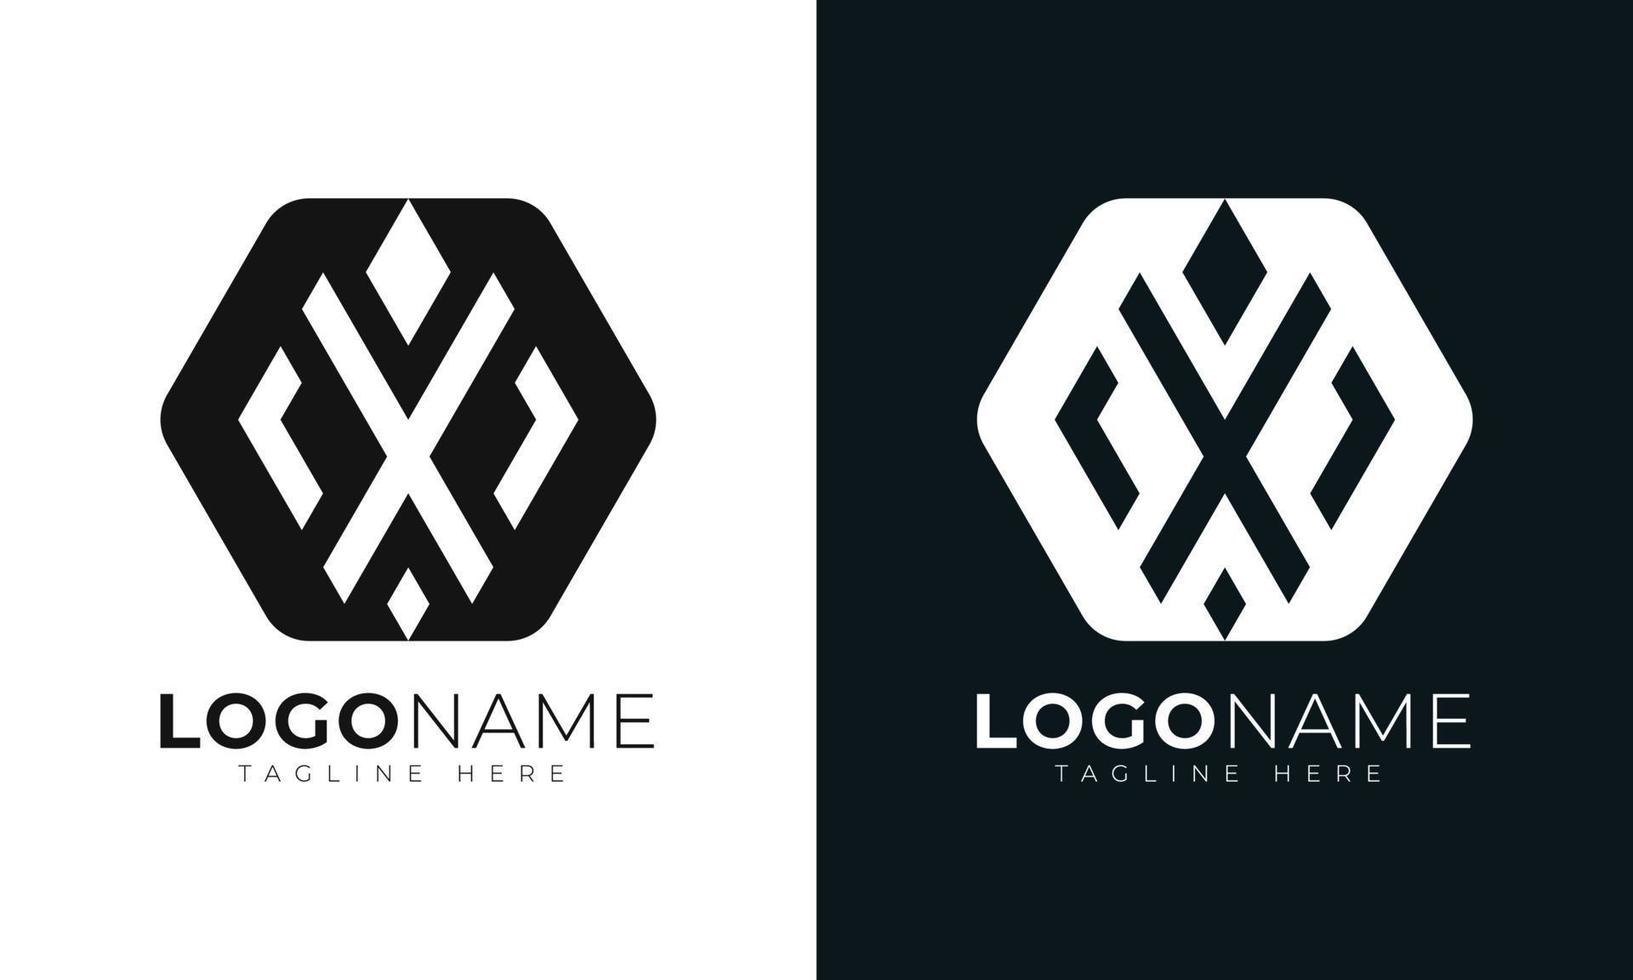 plantilla de diseño de vector de logotipo de letra inicial x. con forma hexagonal. estilo poligonal.